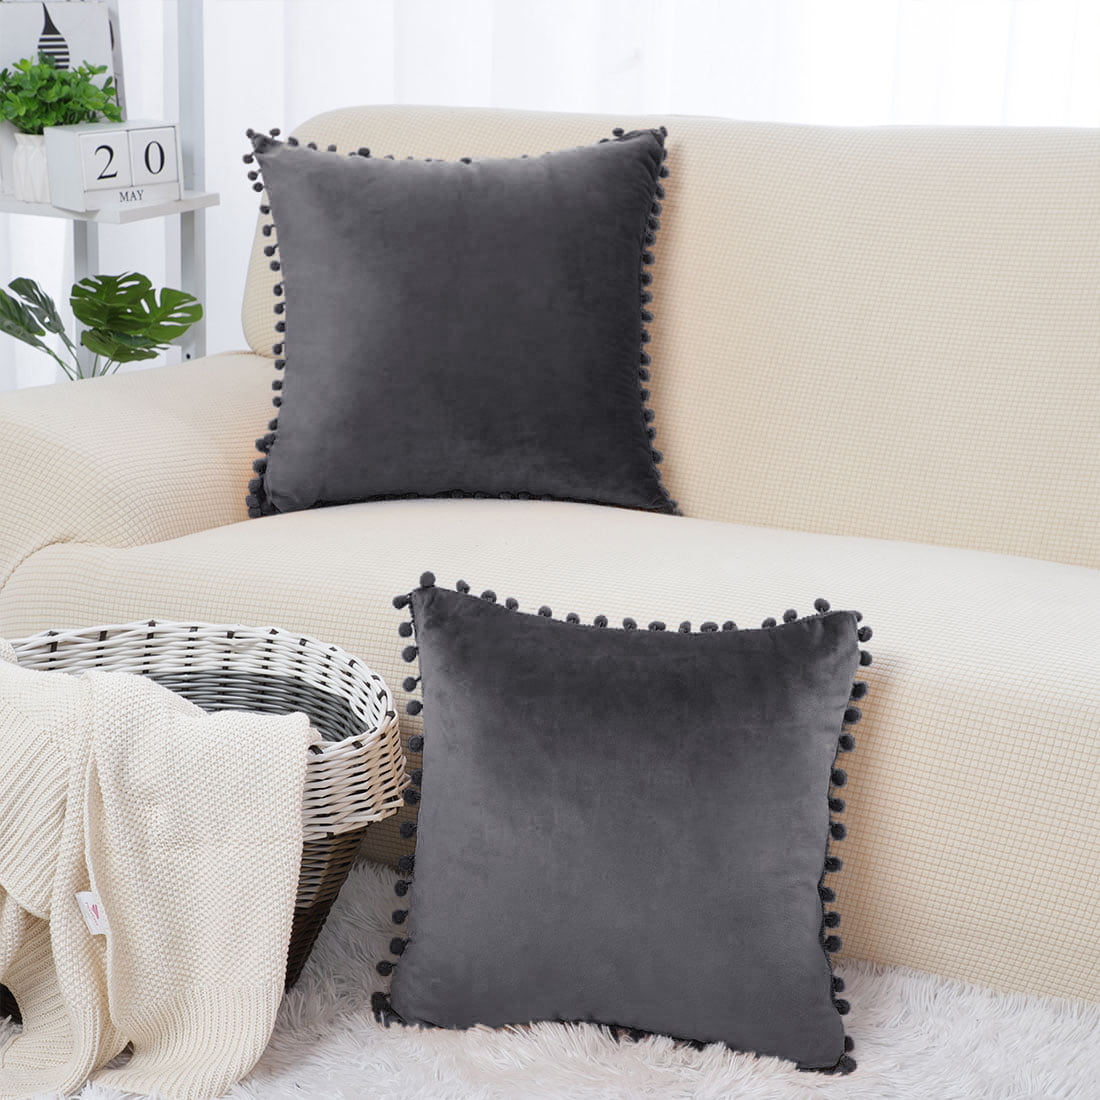 Details about   Soft Velvet Cushion Cover Pom Poms Home Decorative Sofa Car Throw Pillow Case UK 